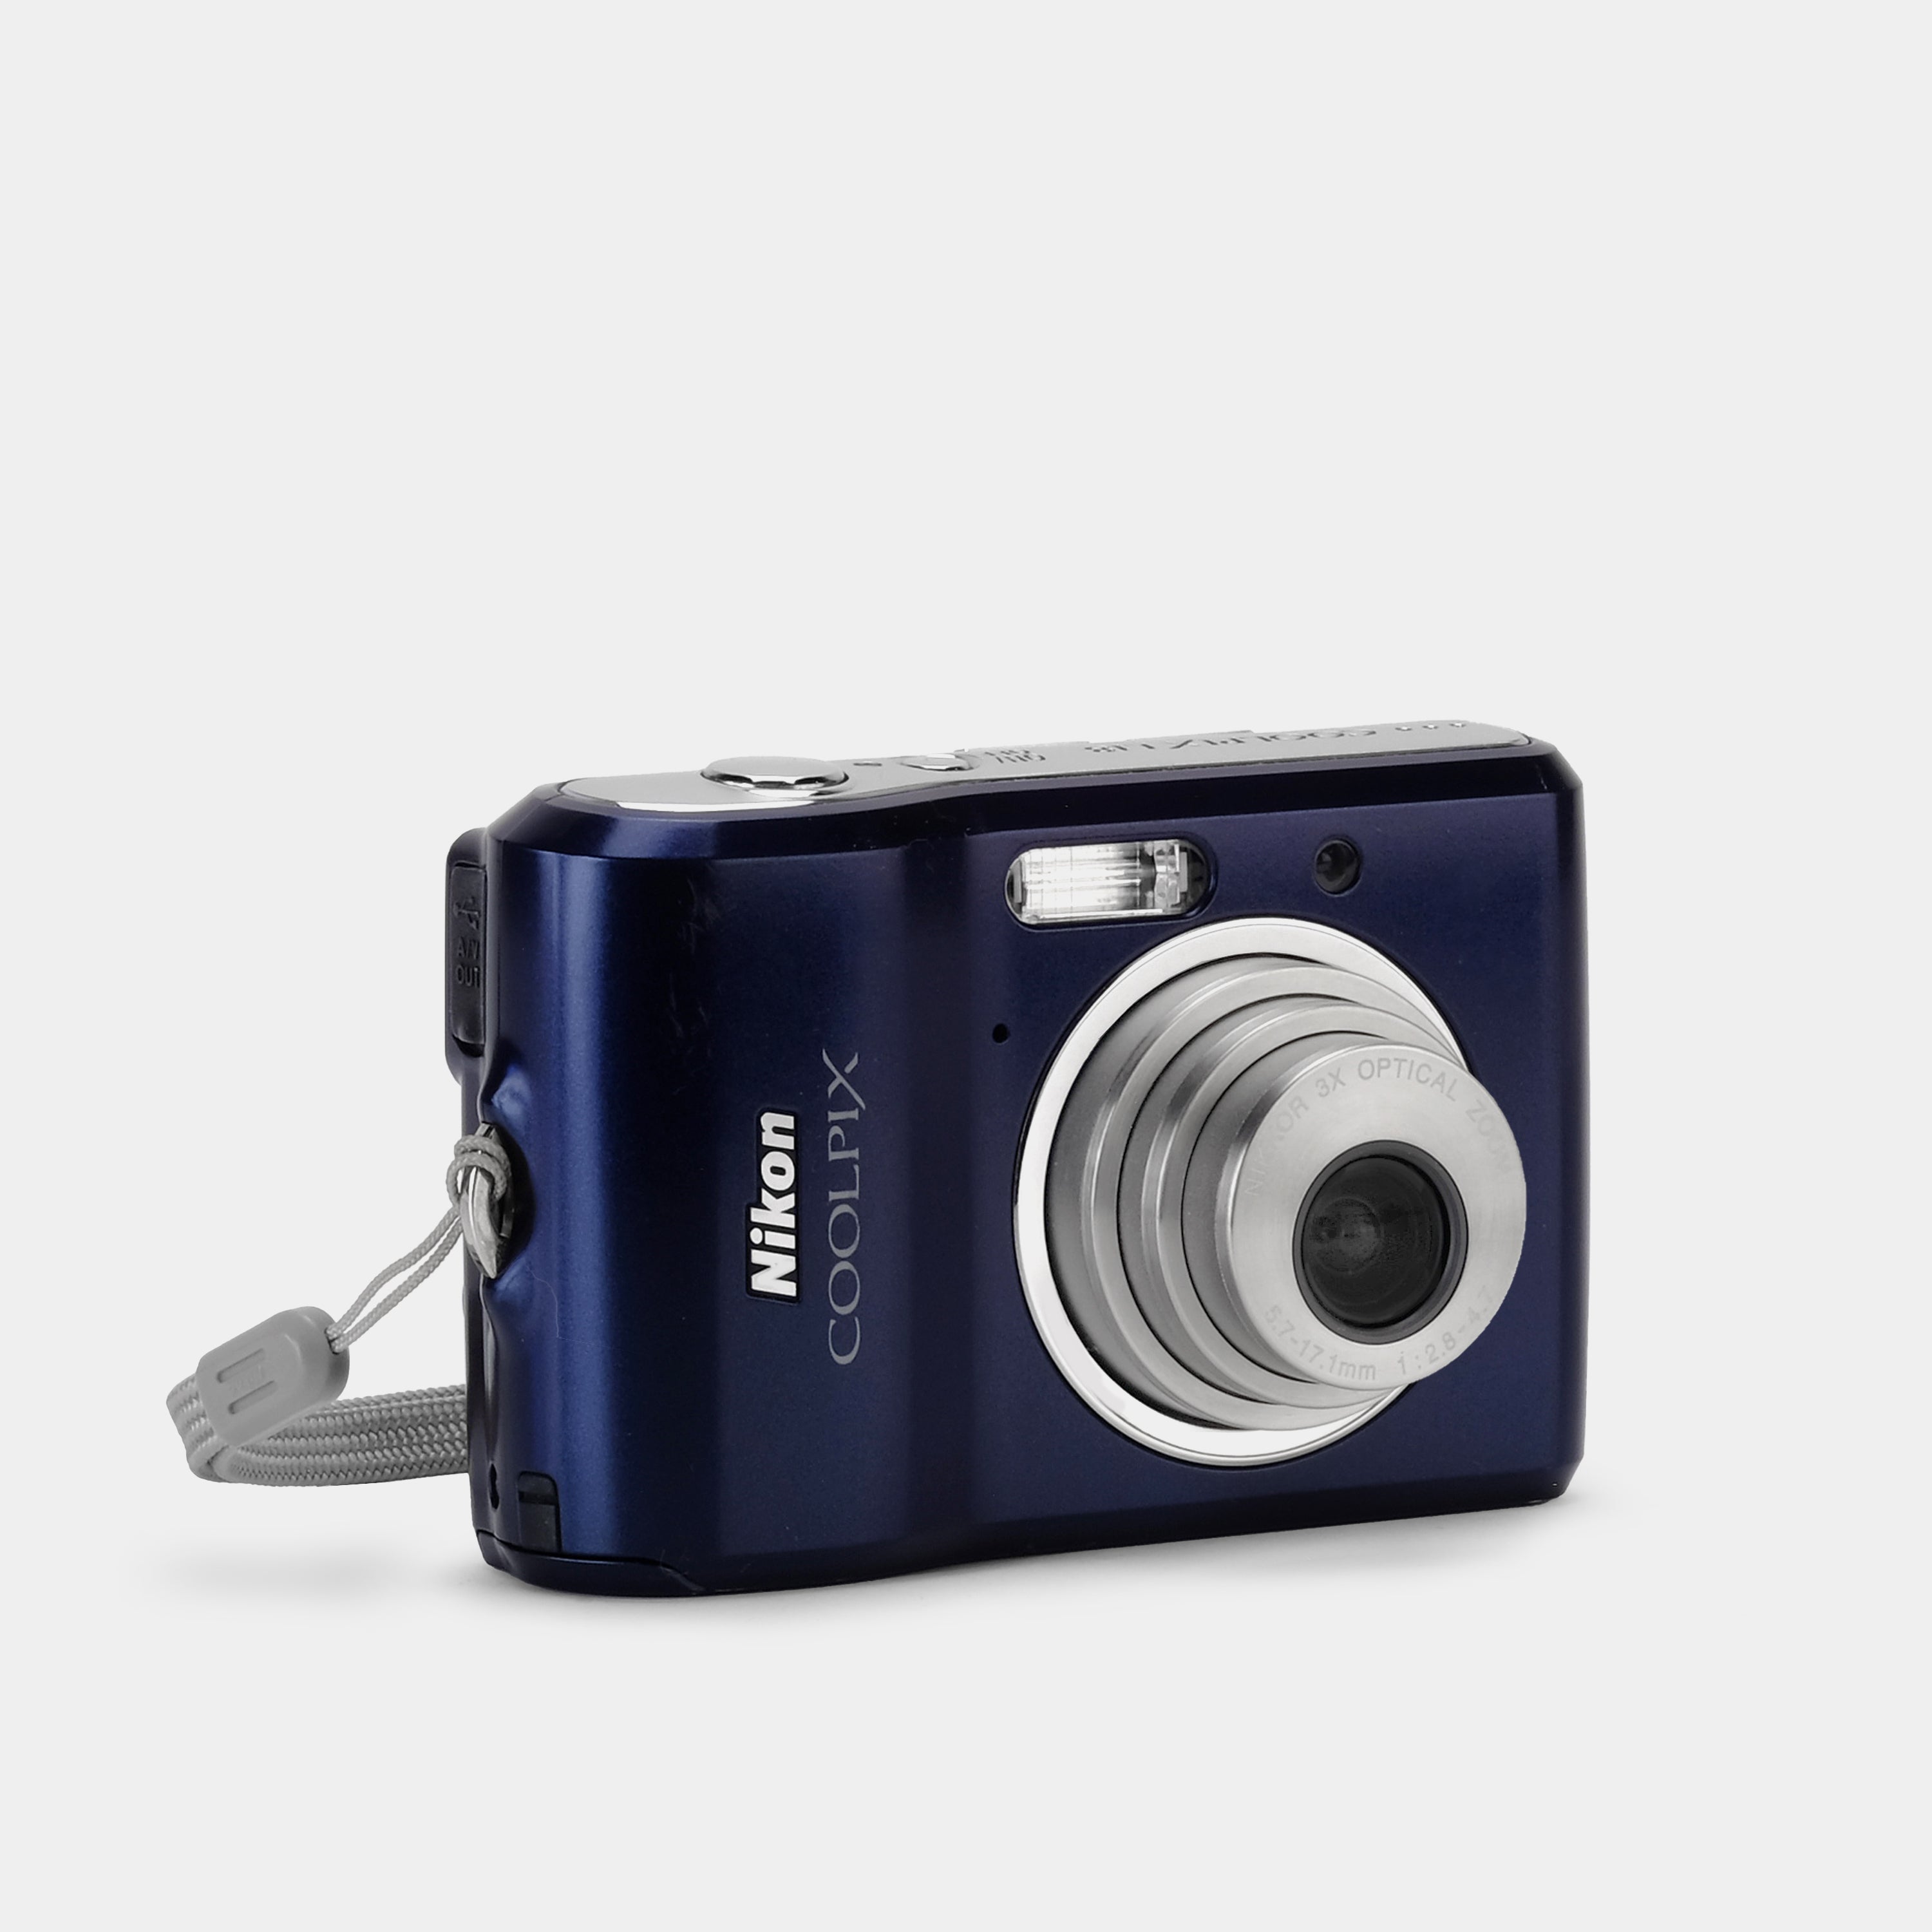 Nikon Coolpix L18 Blue Point and Shoot Digital Camera